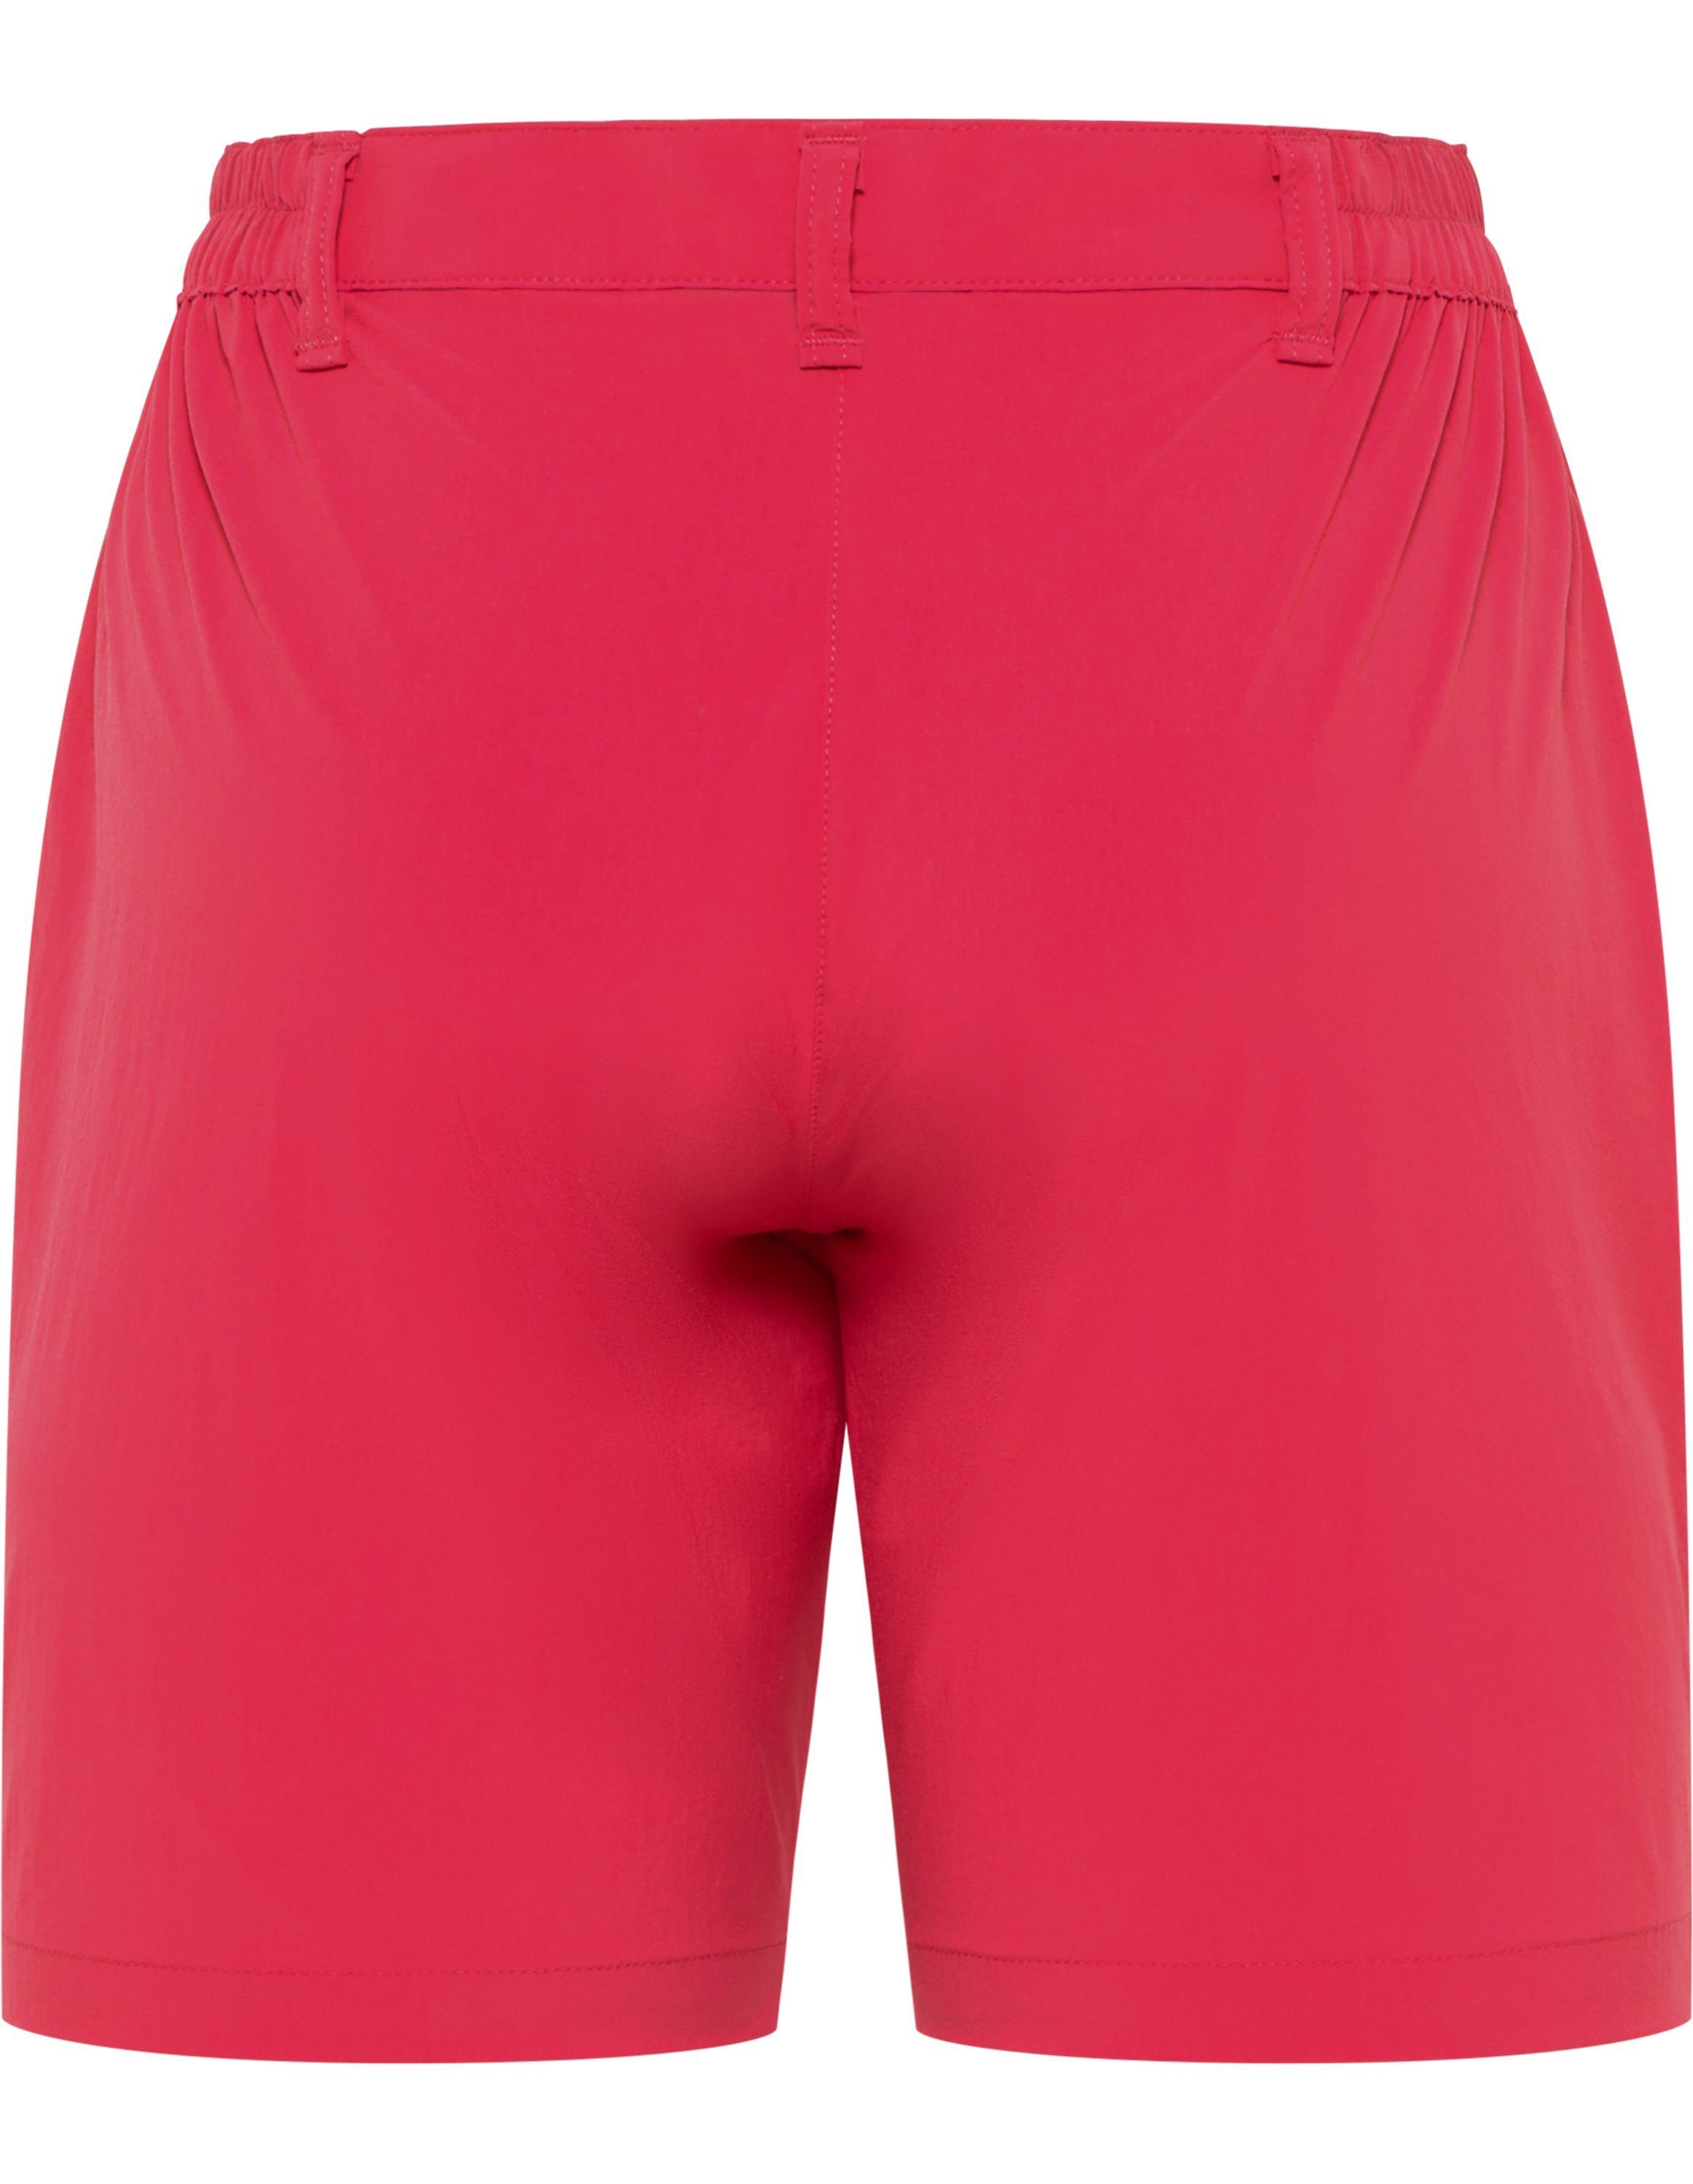 Kurze Hose Hot-Sportswear red Ordesa Trainingsshorts rose